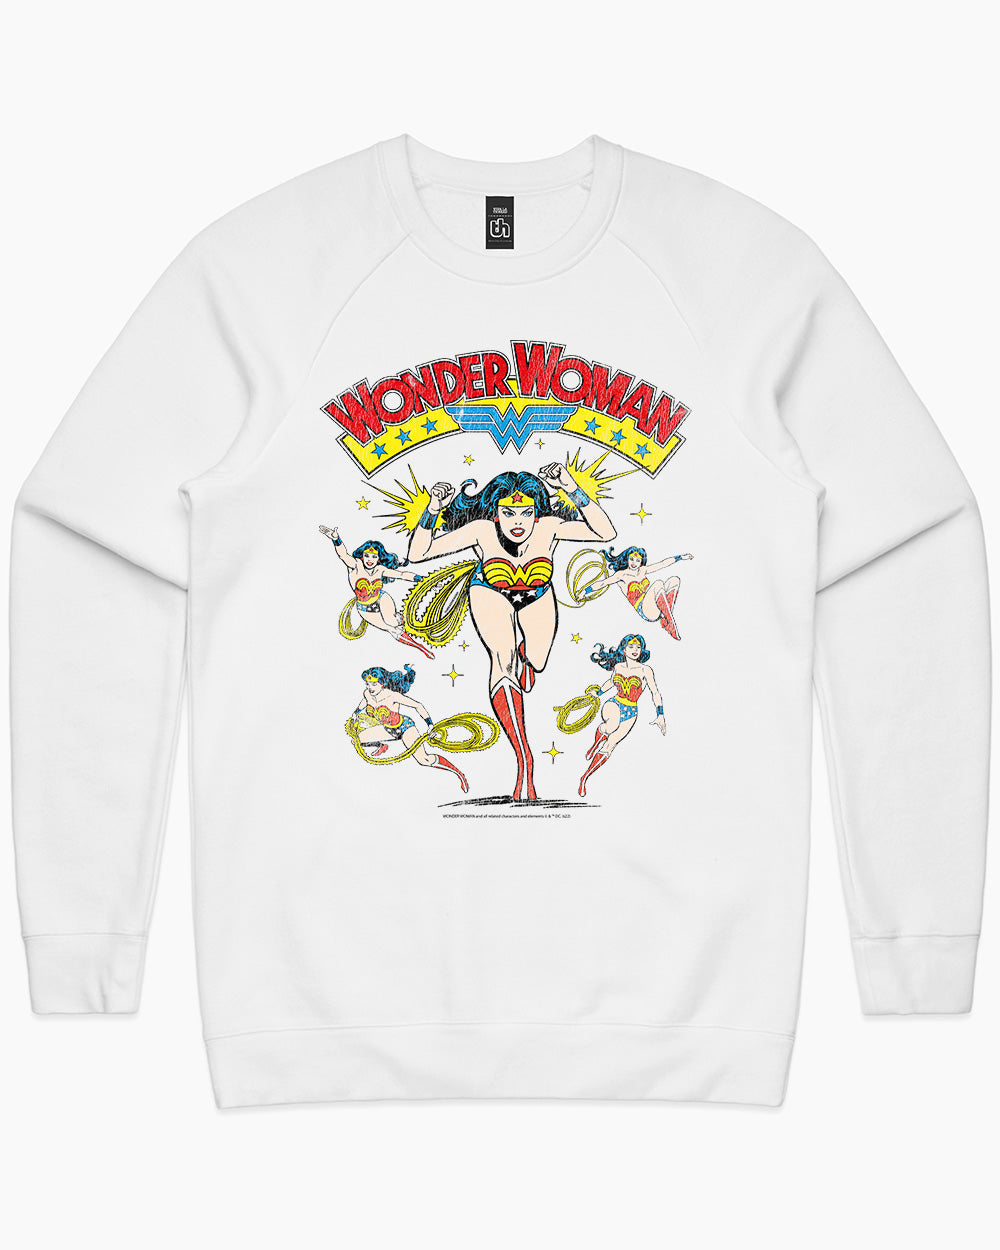 Wonder Woman Vintage Jumper, Official DC Merch